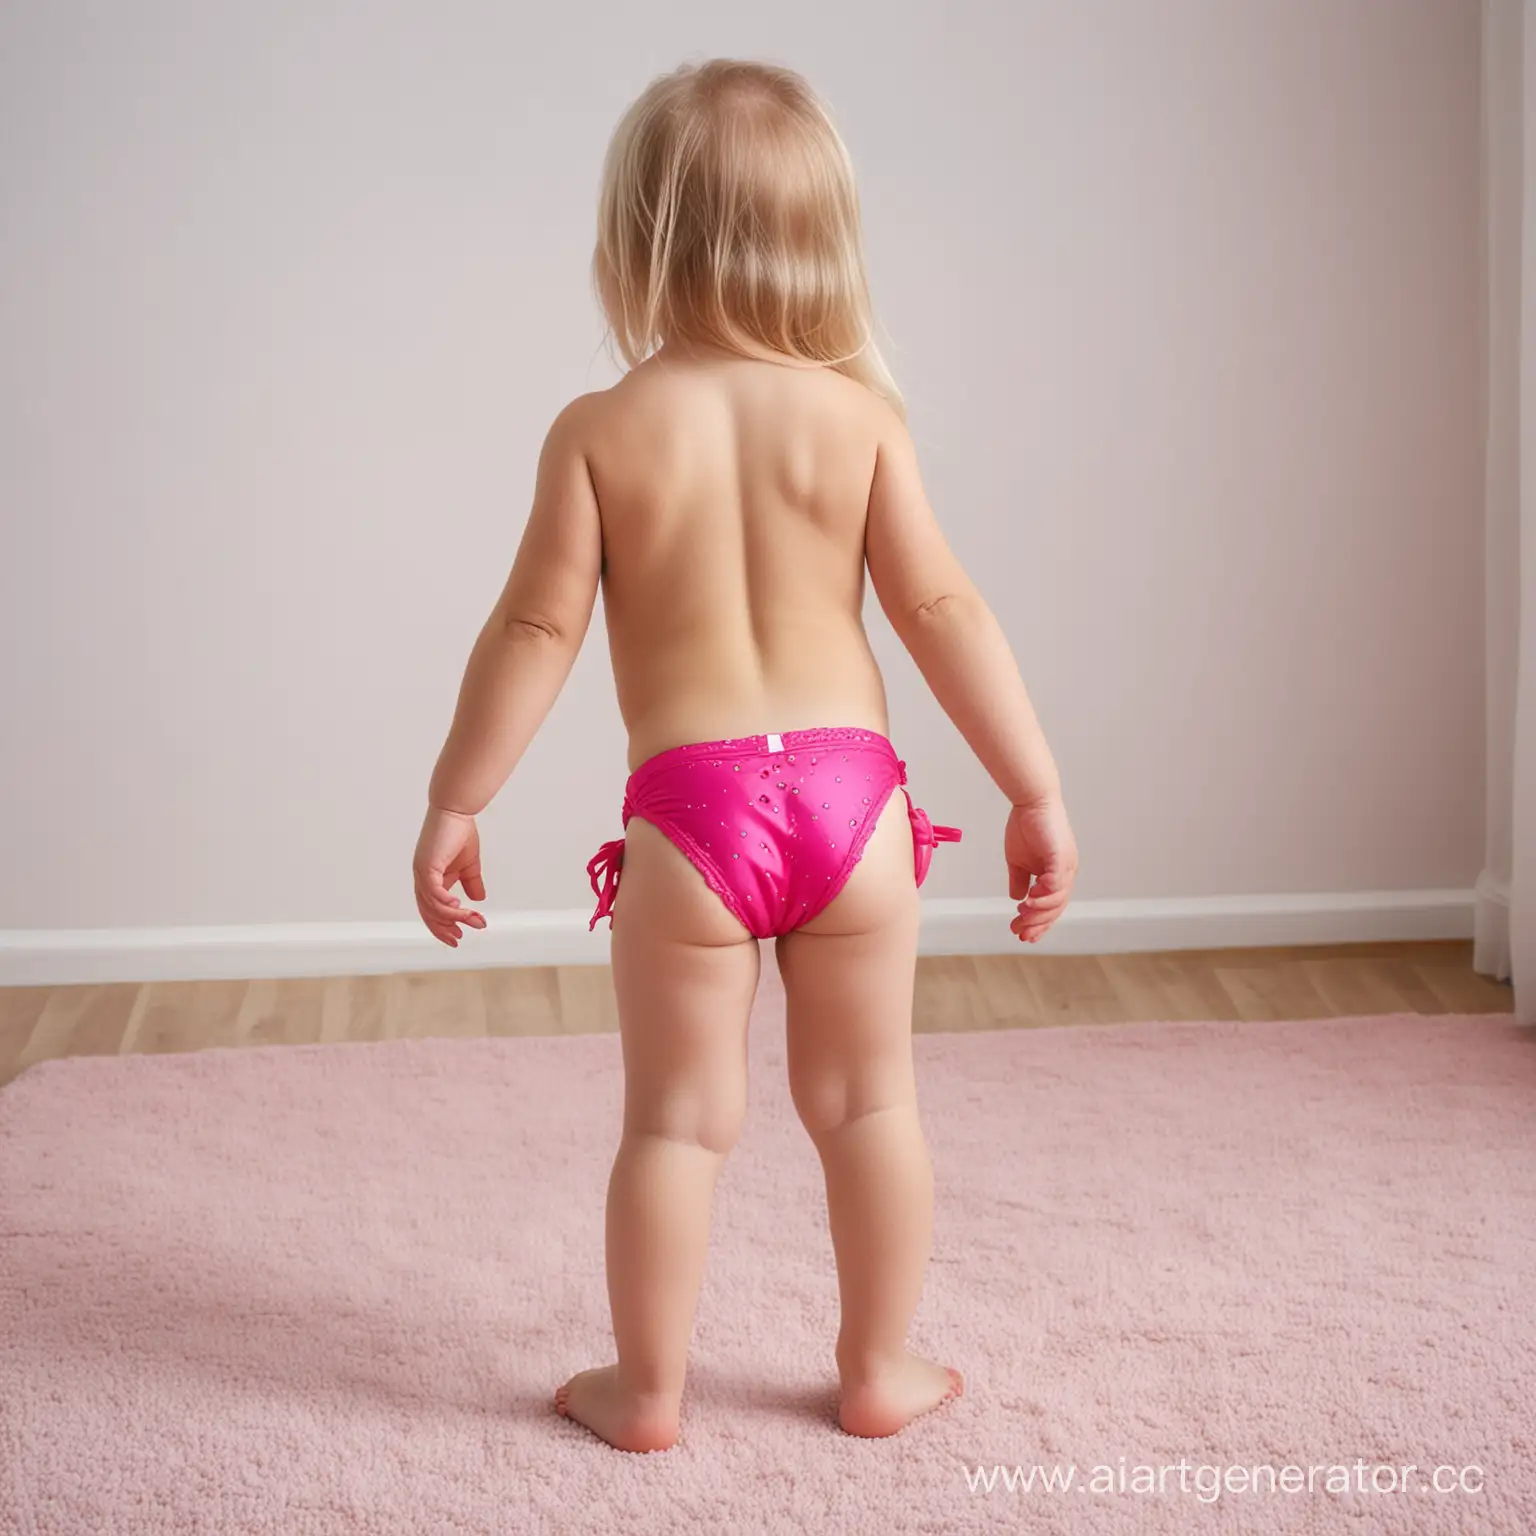 FourYearOld-Blonde-Girl-in-Pink-Thongs-Standing-Playfully